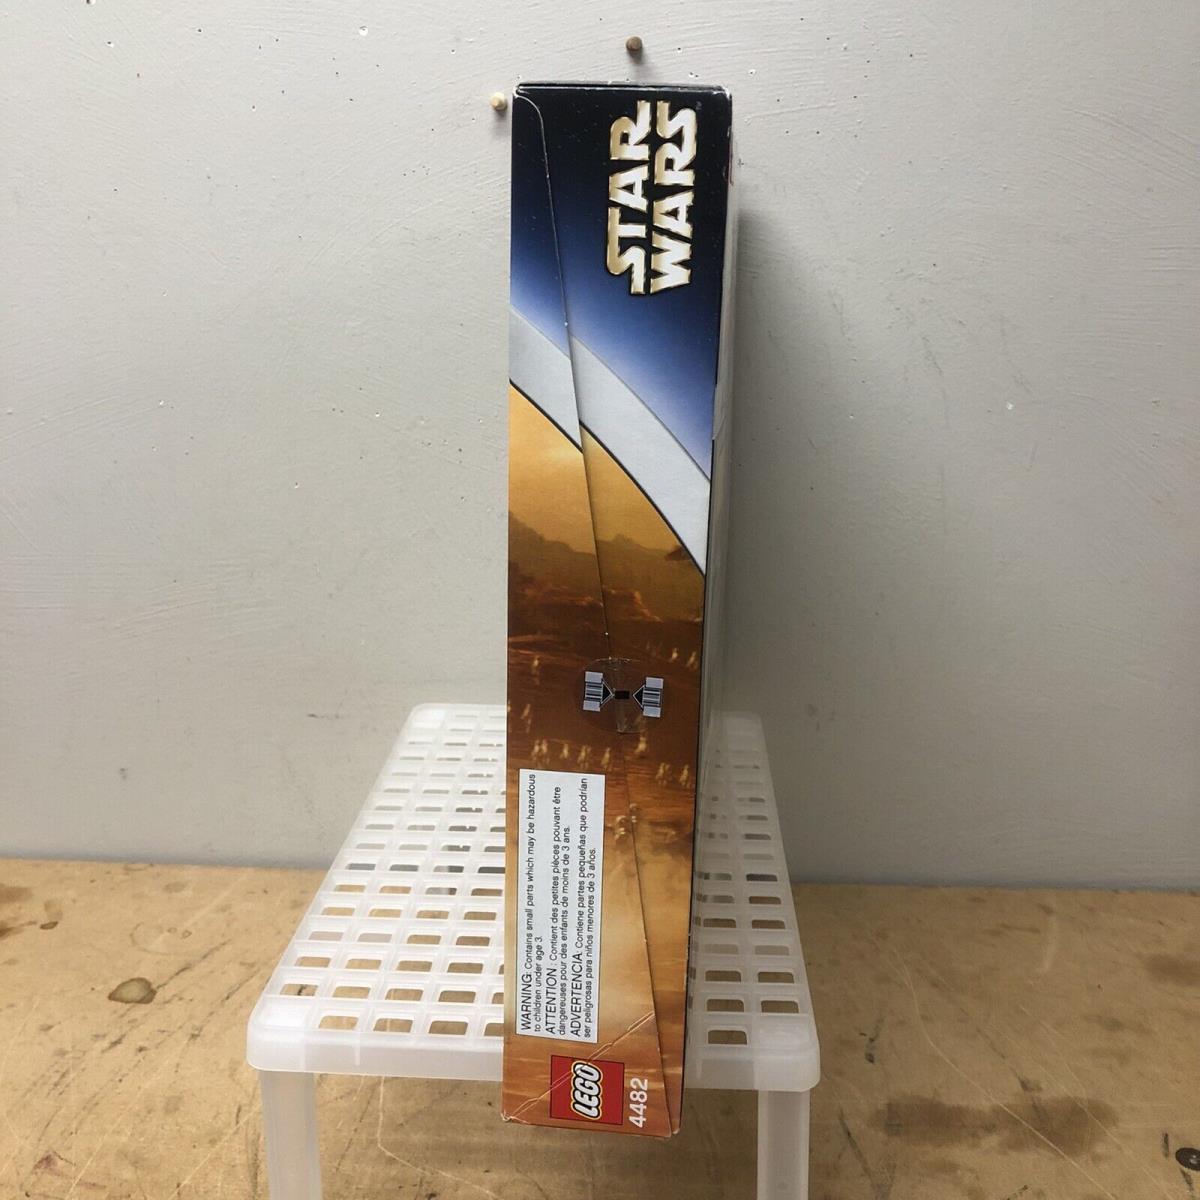 Lego Star Wars: At-te 4482 Box Damage